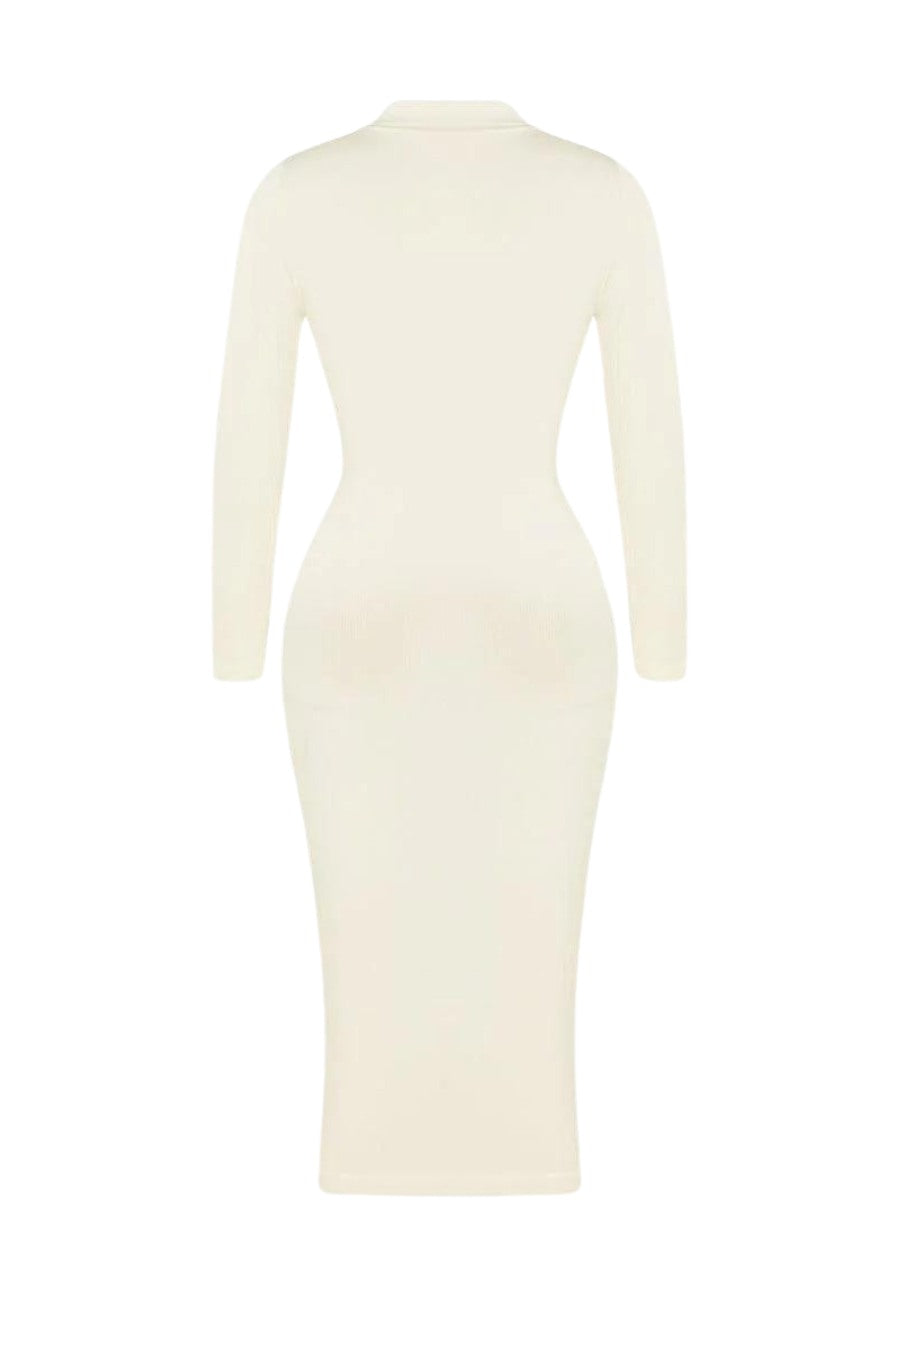 SAMPLE - Cream Shaping Dress XS/S